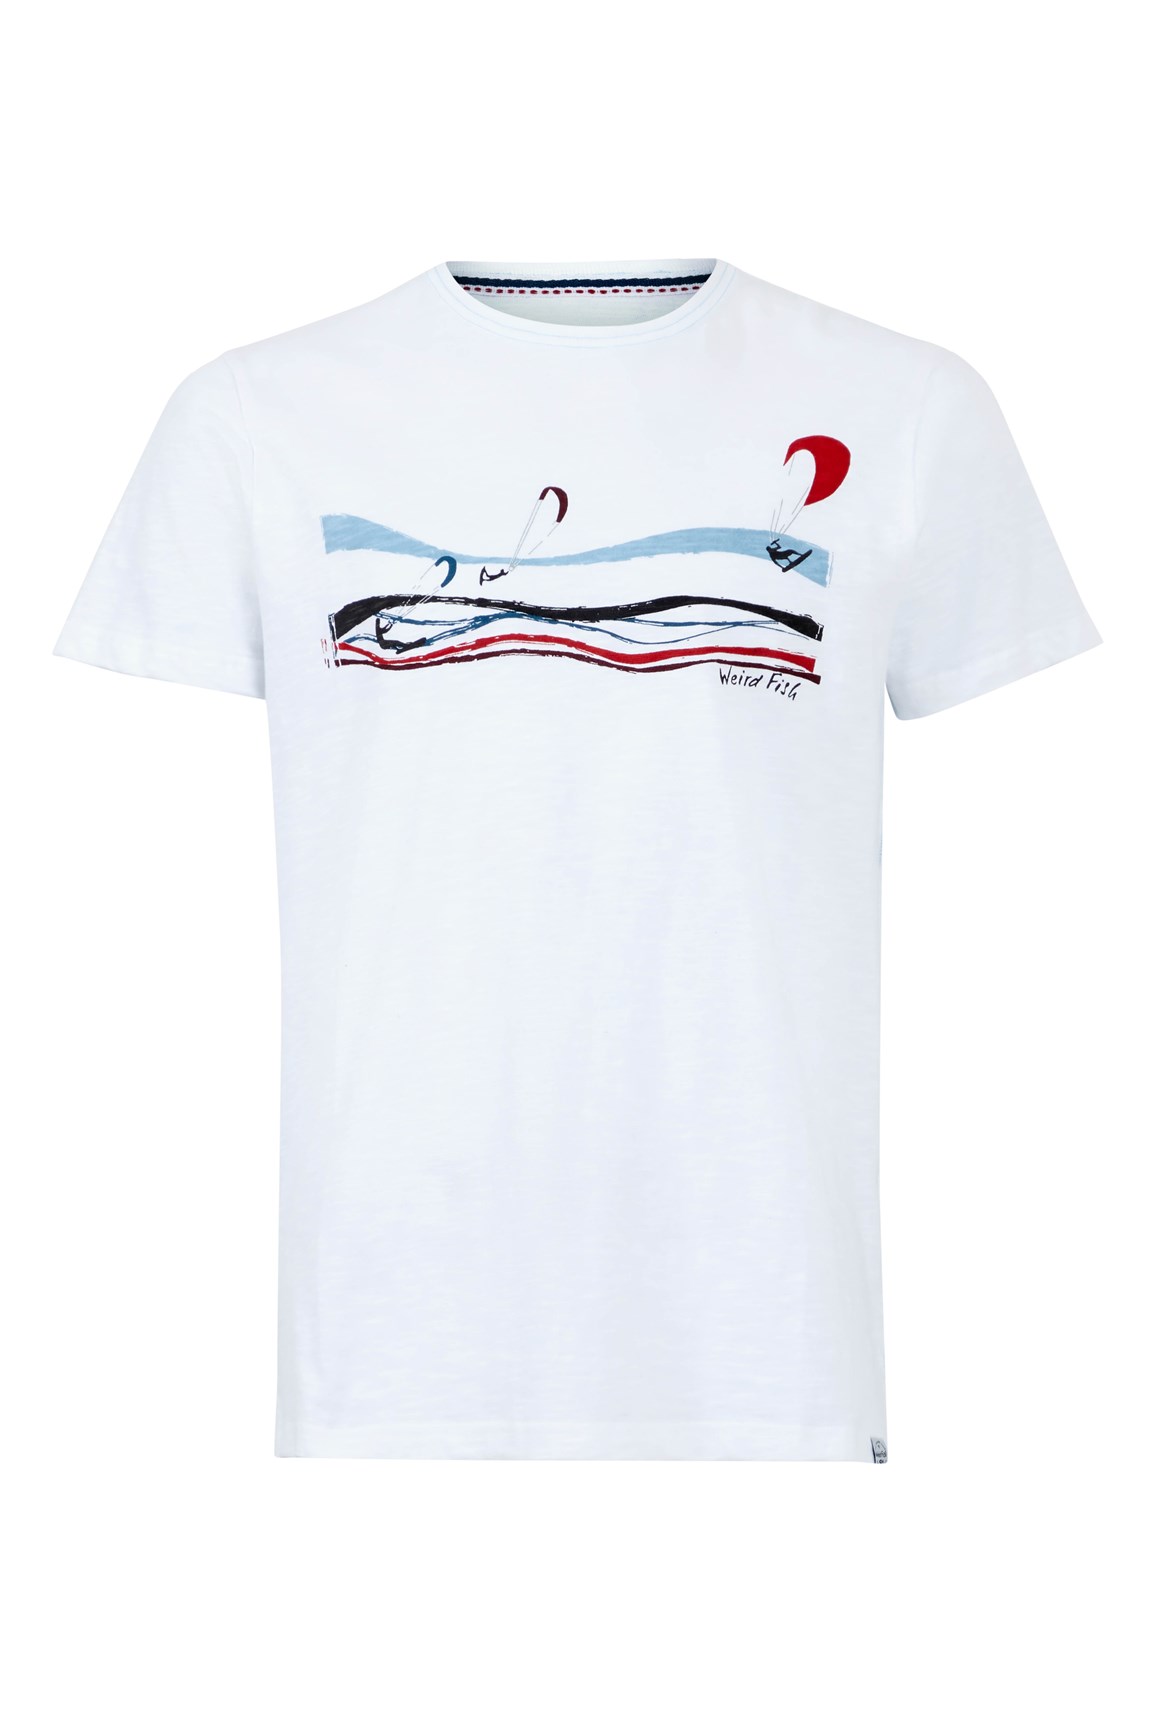 Weird Fish Kitesurfers Organic Cotton Graphic T-Shirt White Size 3XL